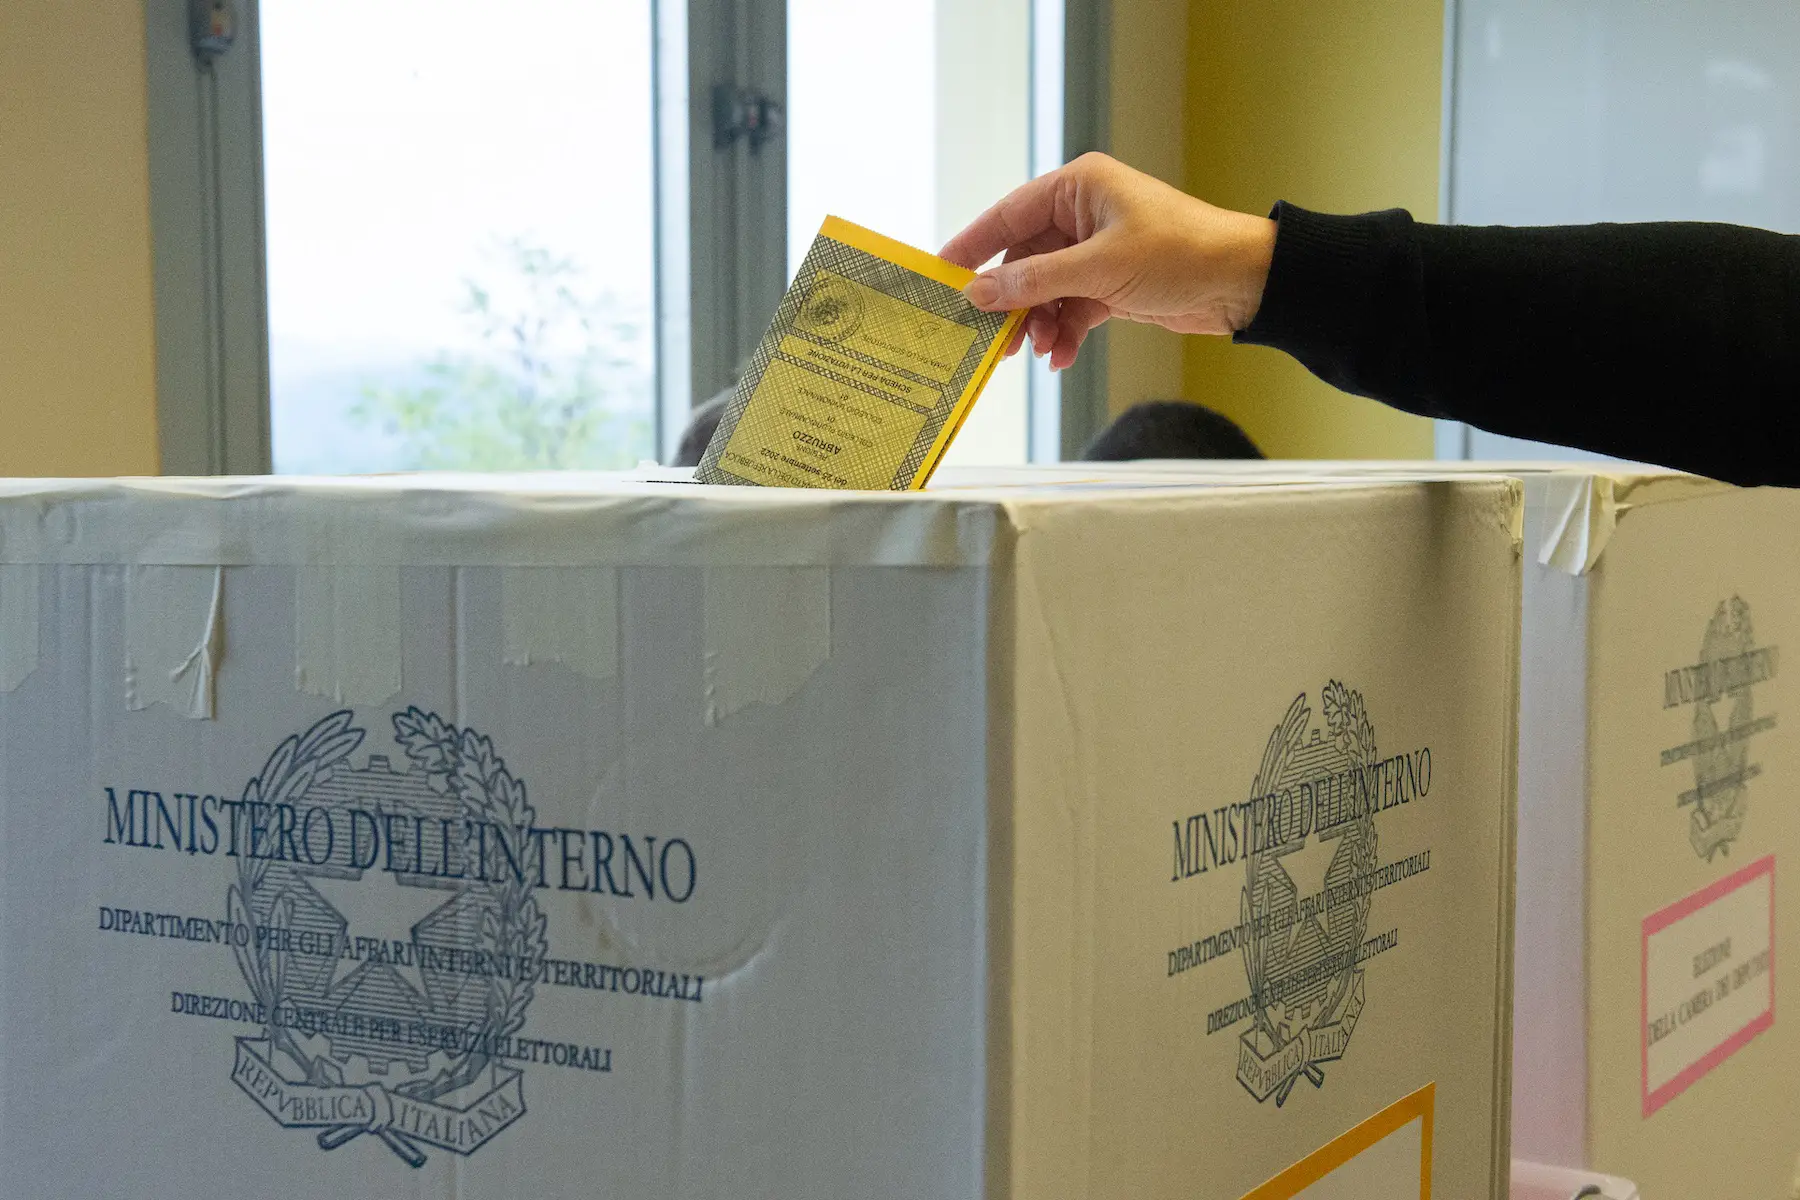 A hand drops a bright yellow voter ballot into the cardboard ballot box during an Italian election